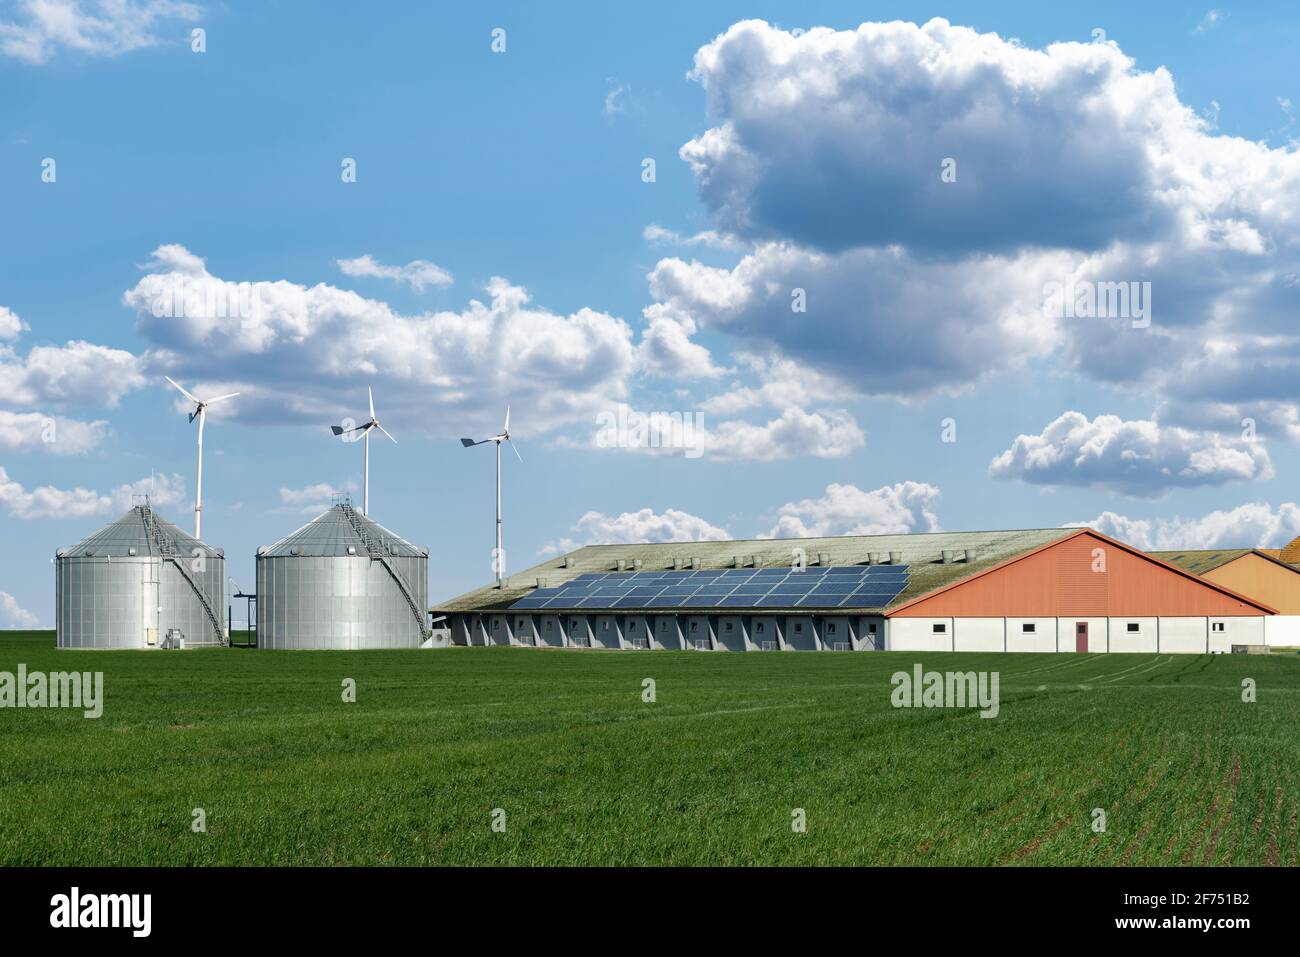 Modern dairy farm using renewable energy, solar panels and wind turbines Stock Photo